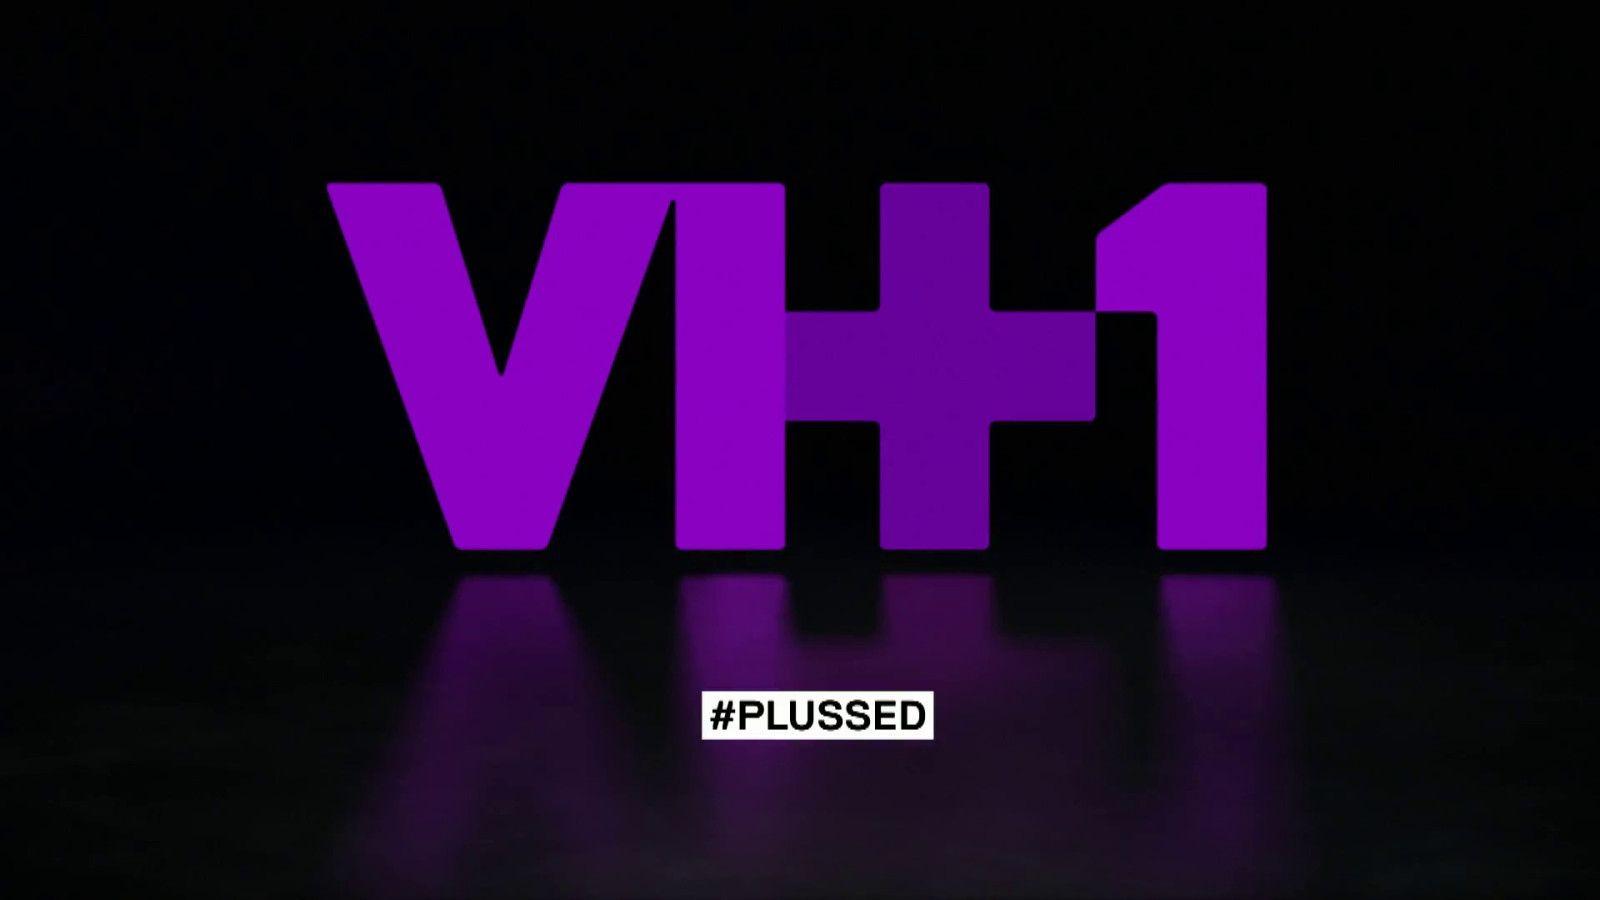 VH1 Logo - The Branding Source: New logo: VH1